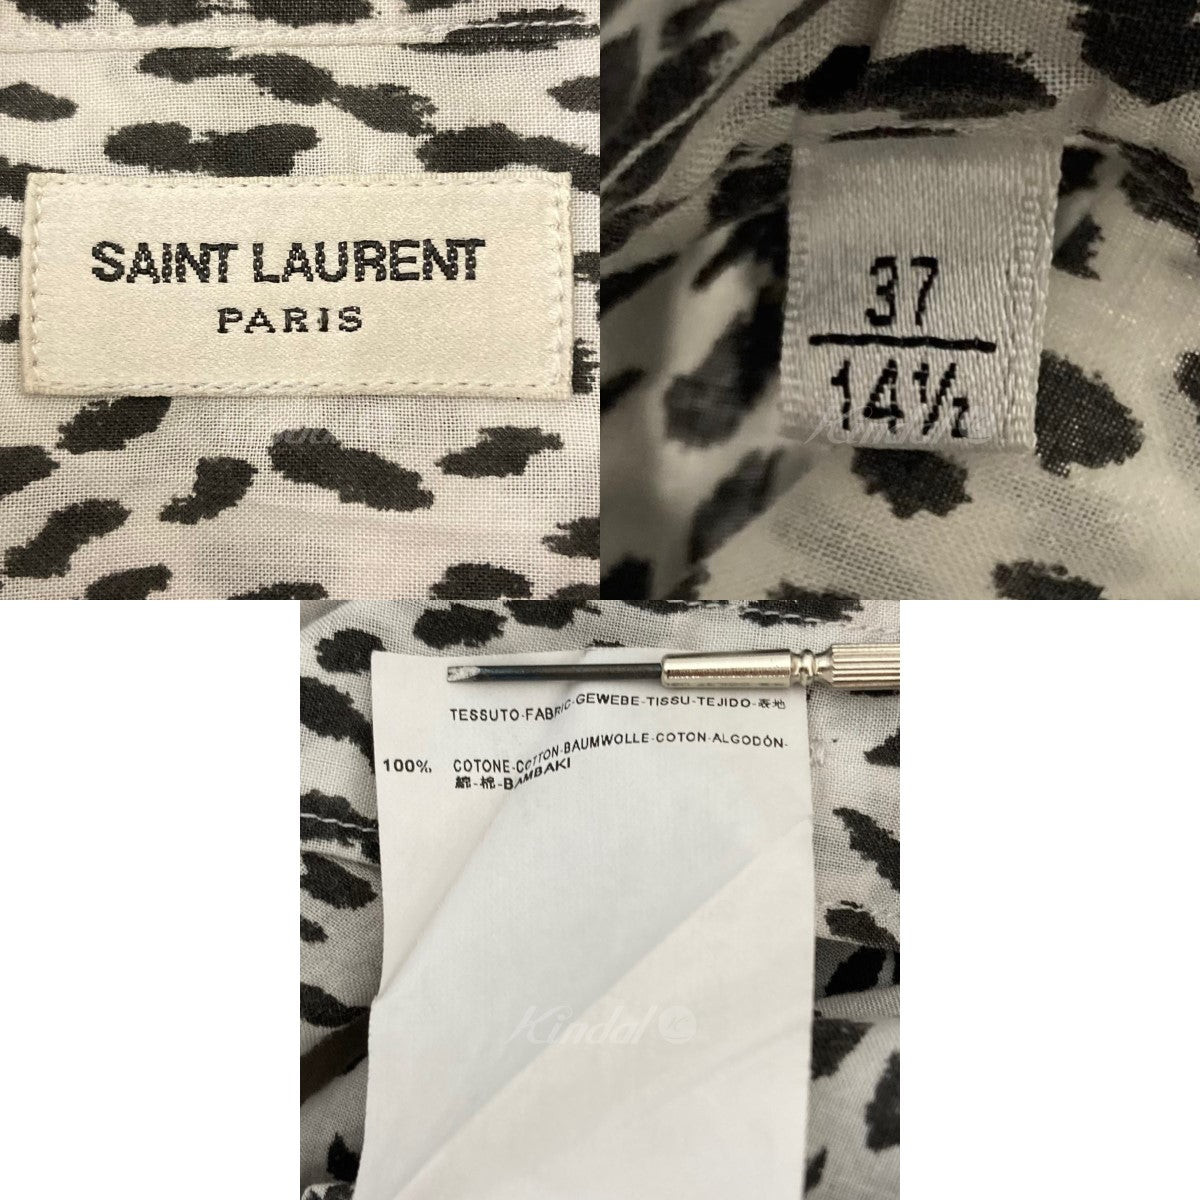 SAINT LAURENT PARIS(サンローランパリ) ベイビーキャットシャツ ...